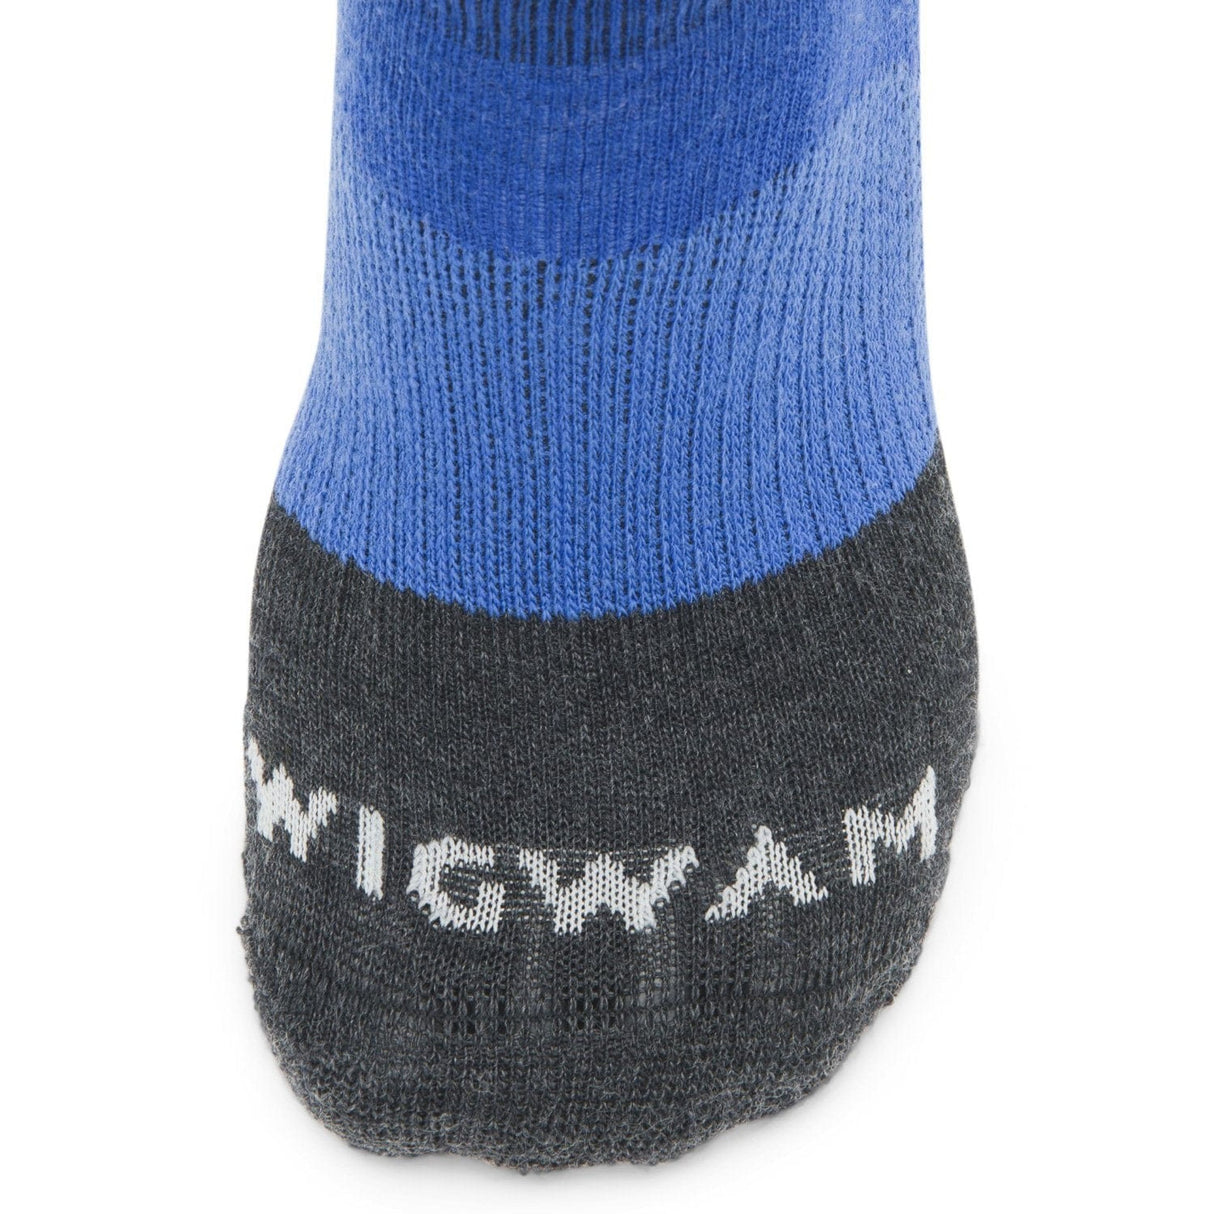 Wigwam Trail Junkie Lightweight Low Cut Socks  - 